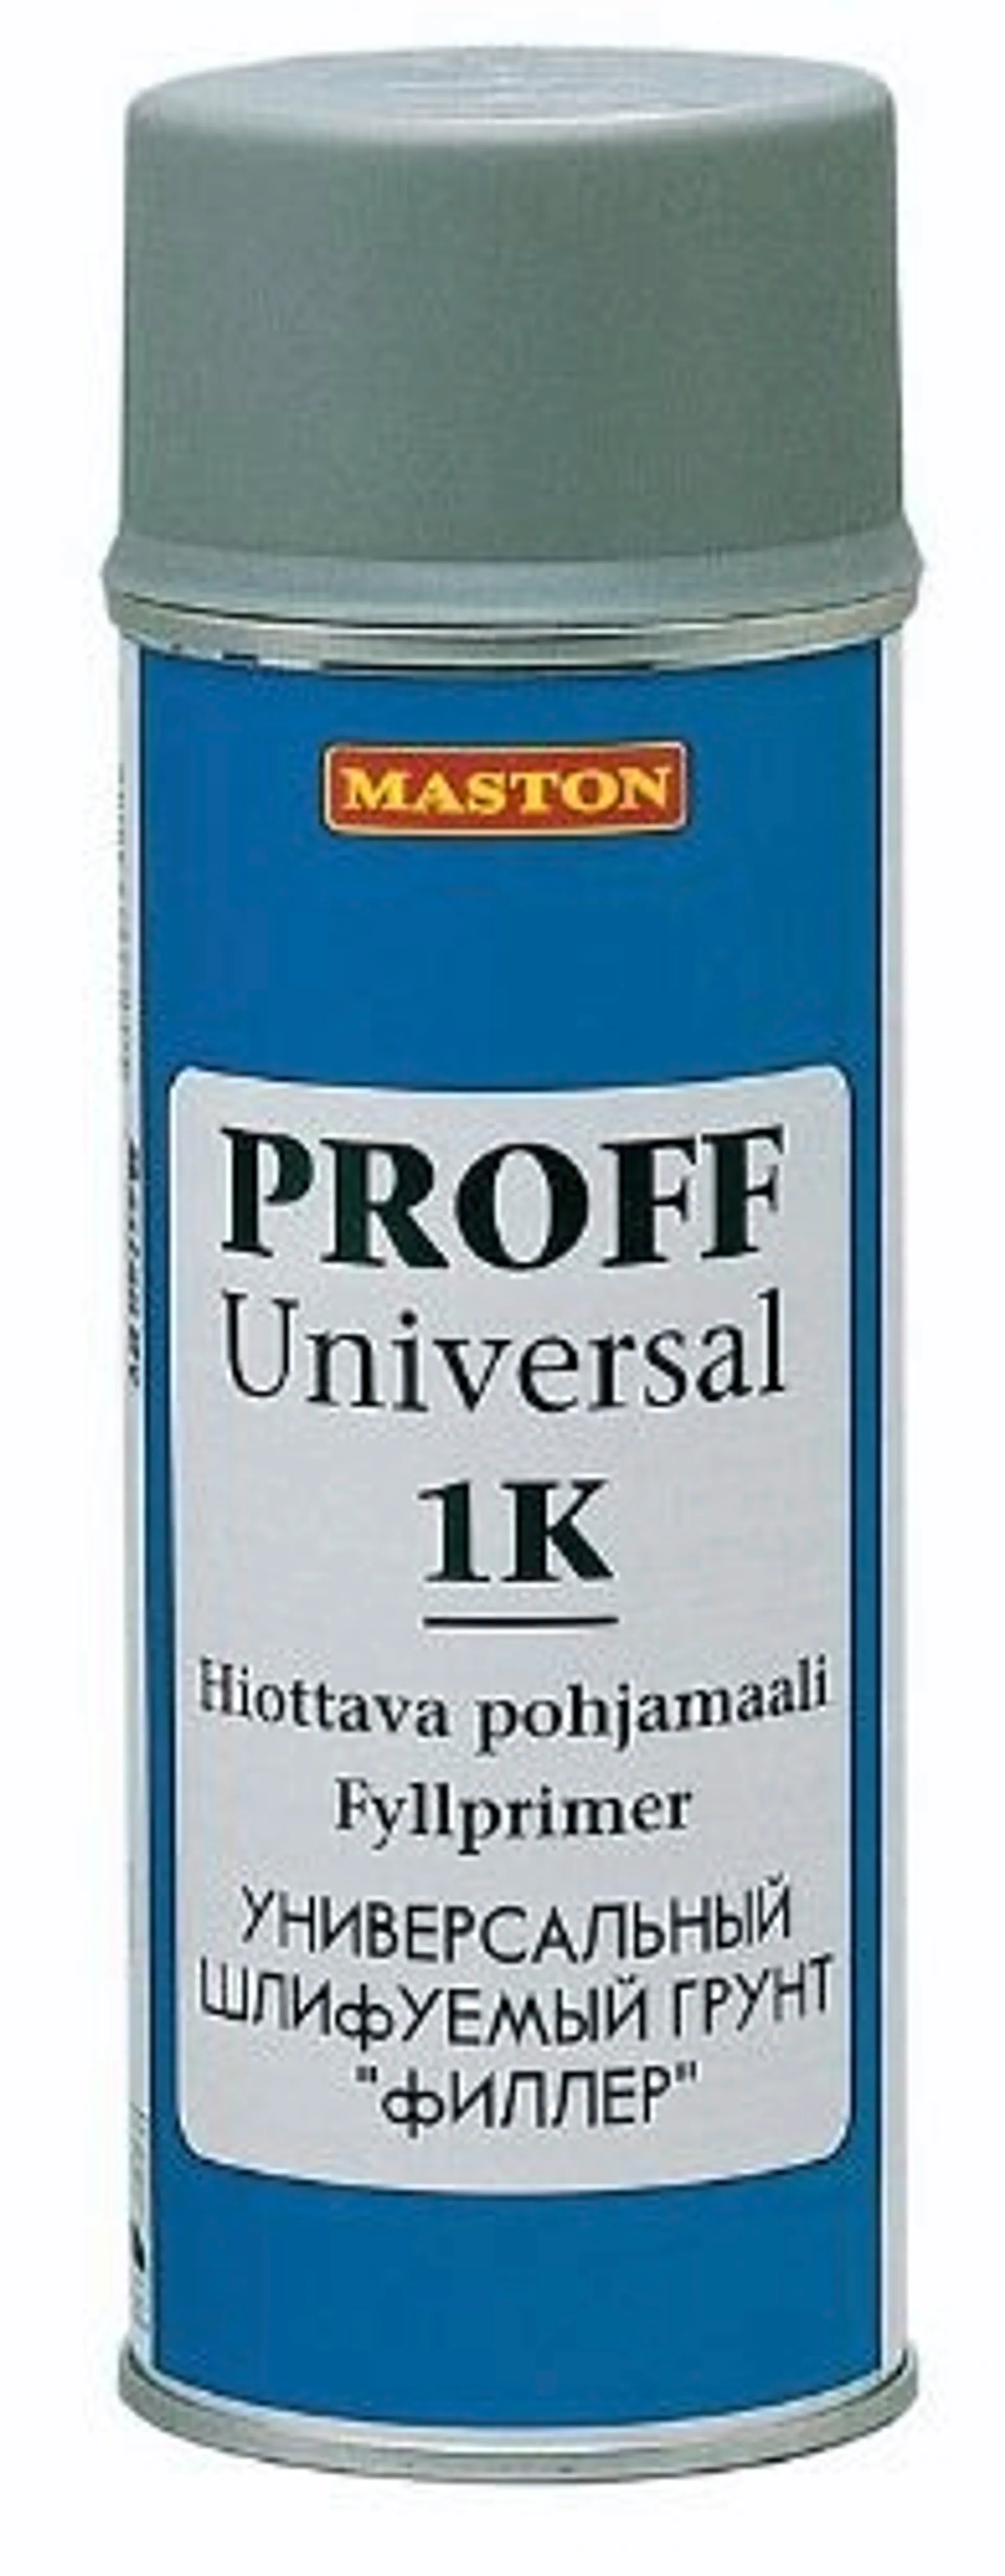 Maston Happohjamaali spray 1-K 400ml harmaa